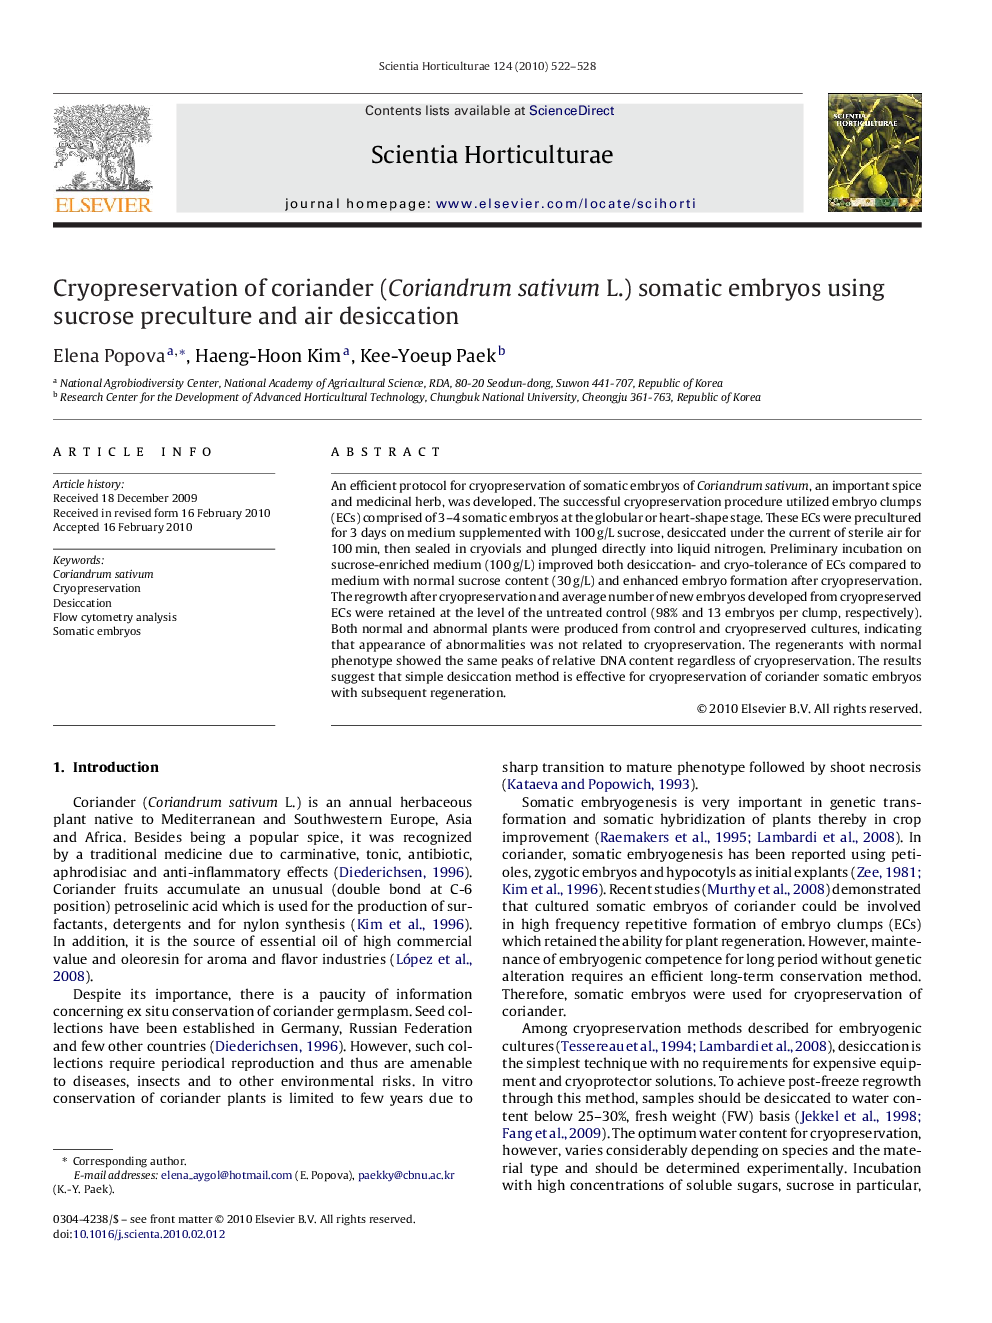 Cryopreservation of coriander (Coriandrum sativum L.) somatic embryos using sucrose preculture and air desiccation